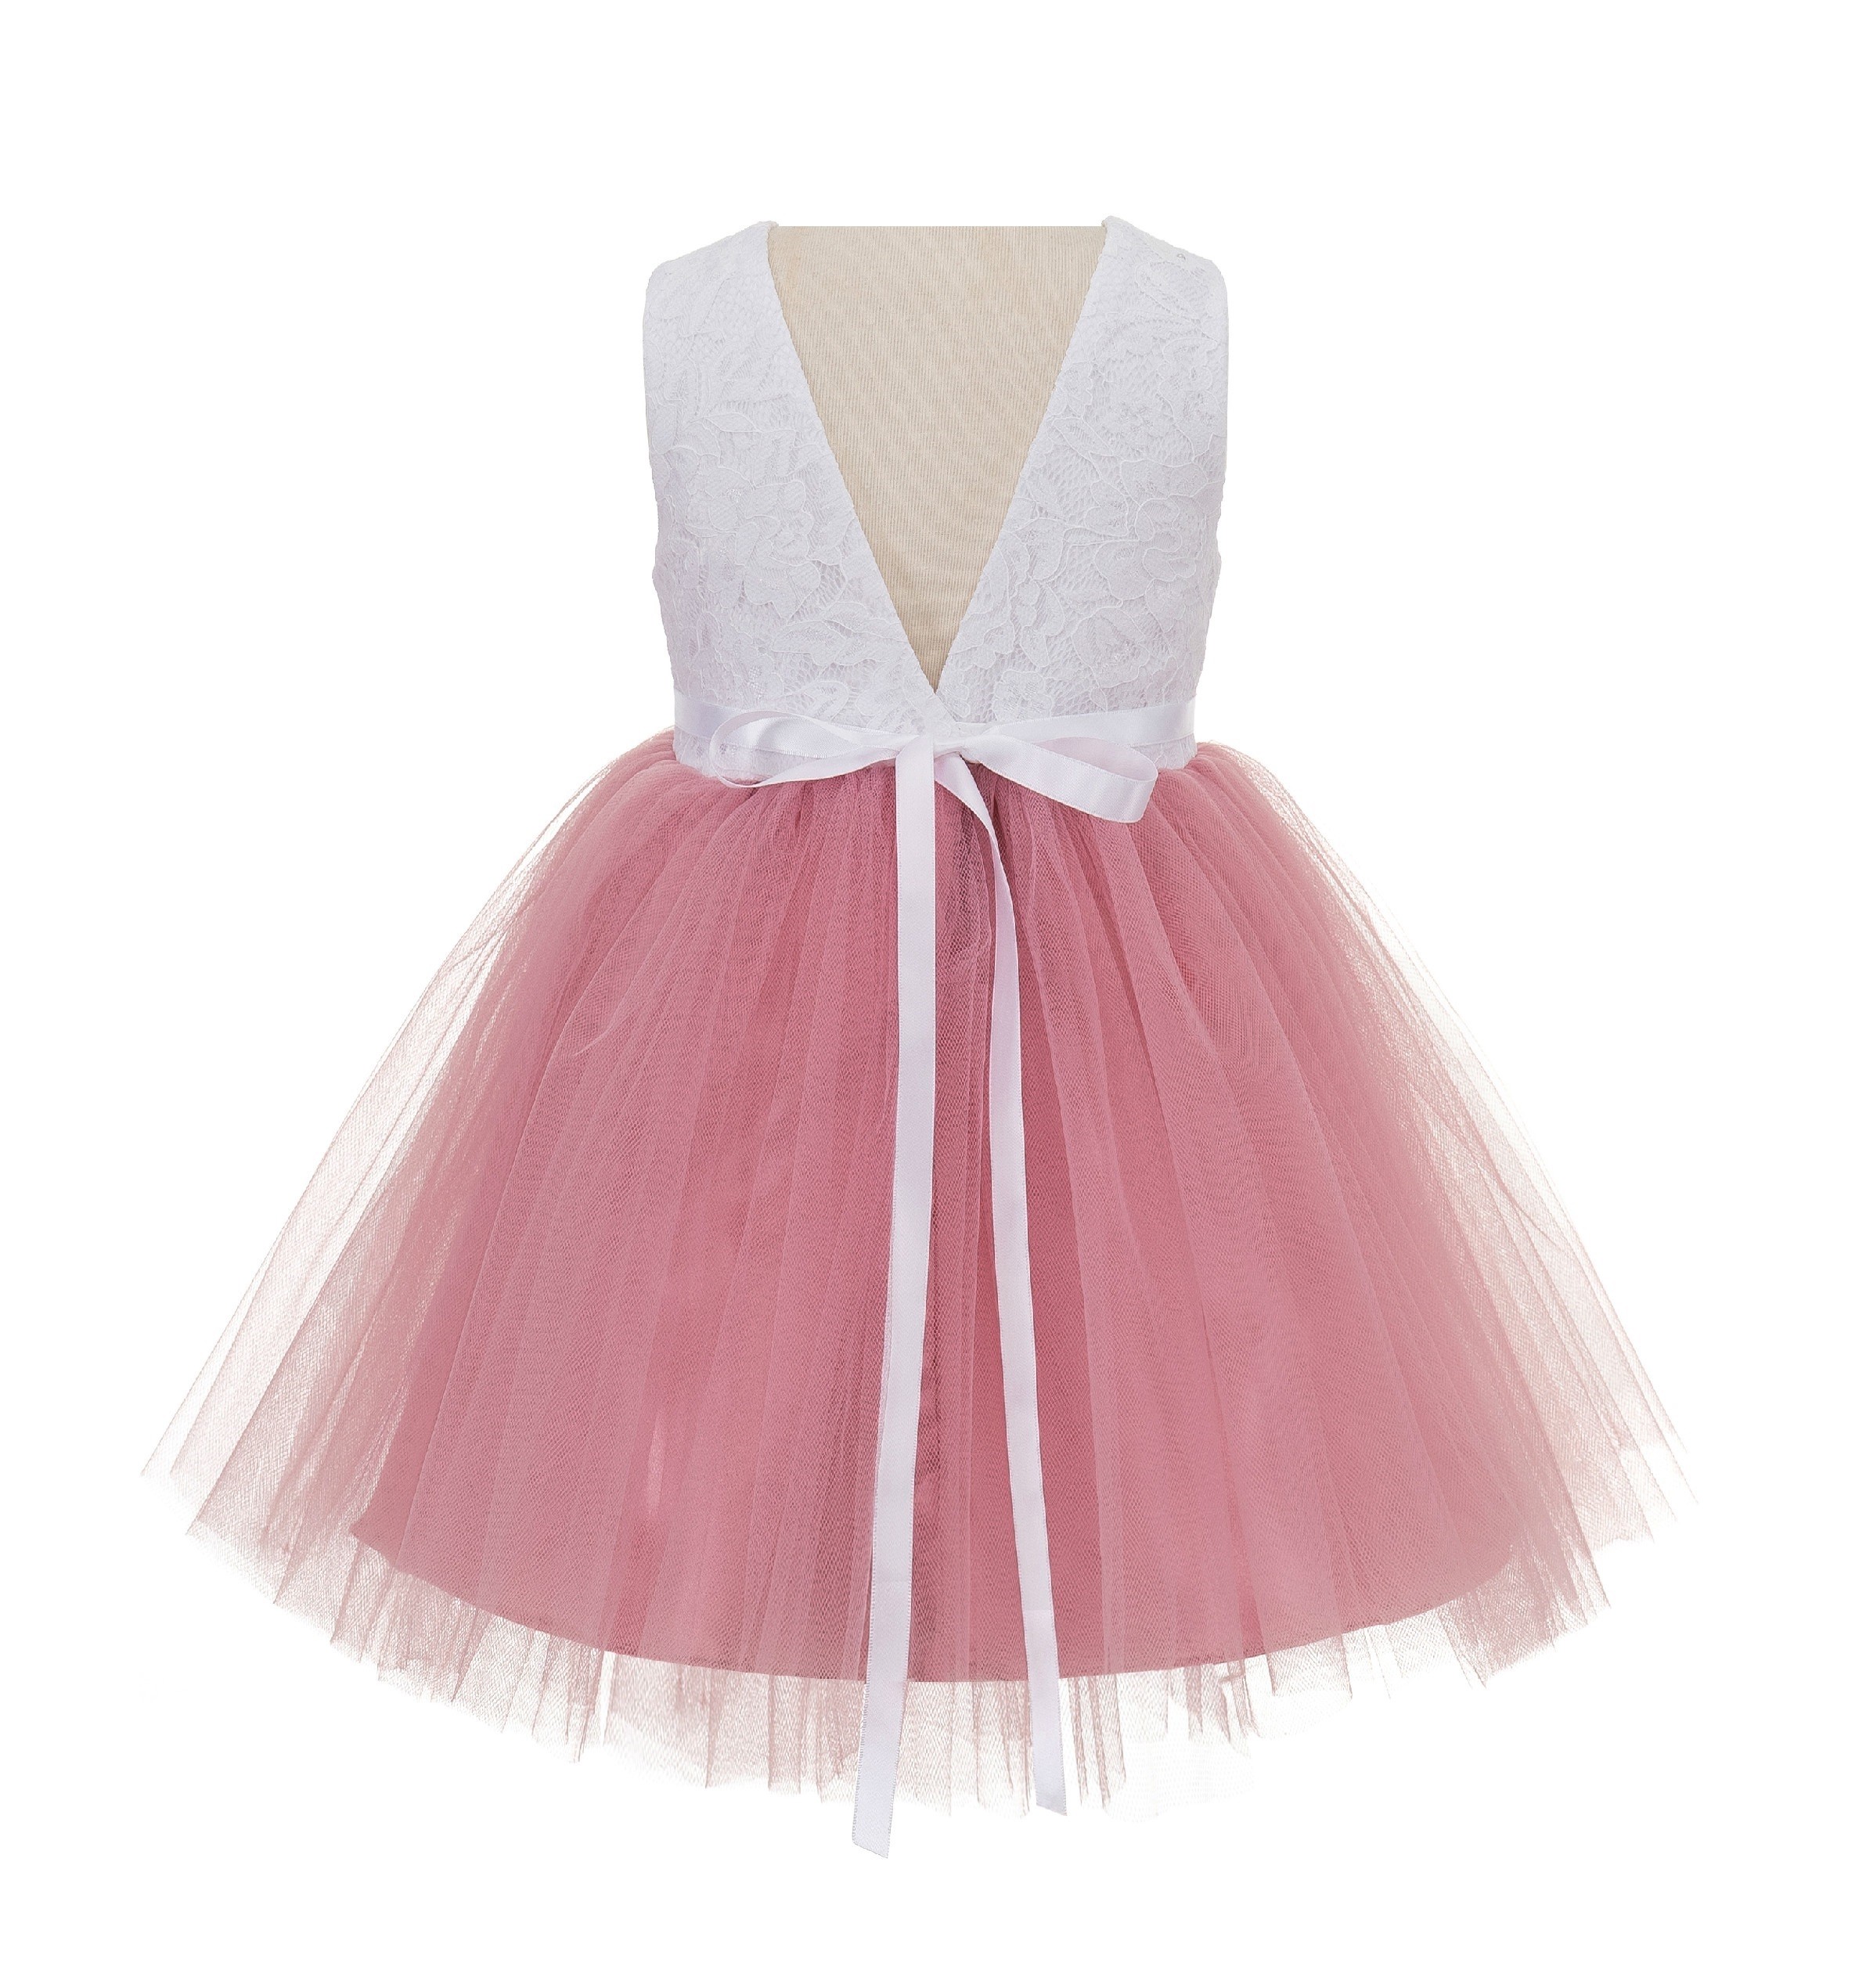 Dusty Rose / White Backless Lace Flower Girl Dress Rhinestone 206R4